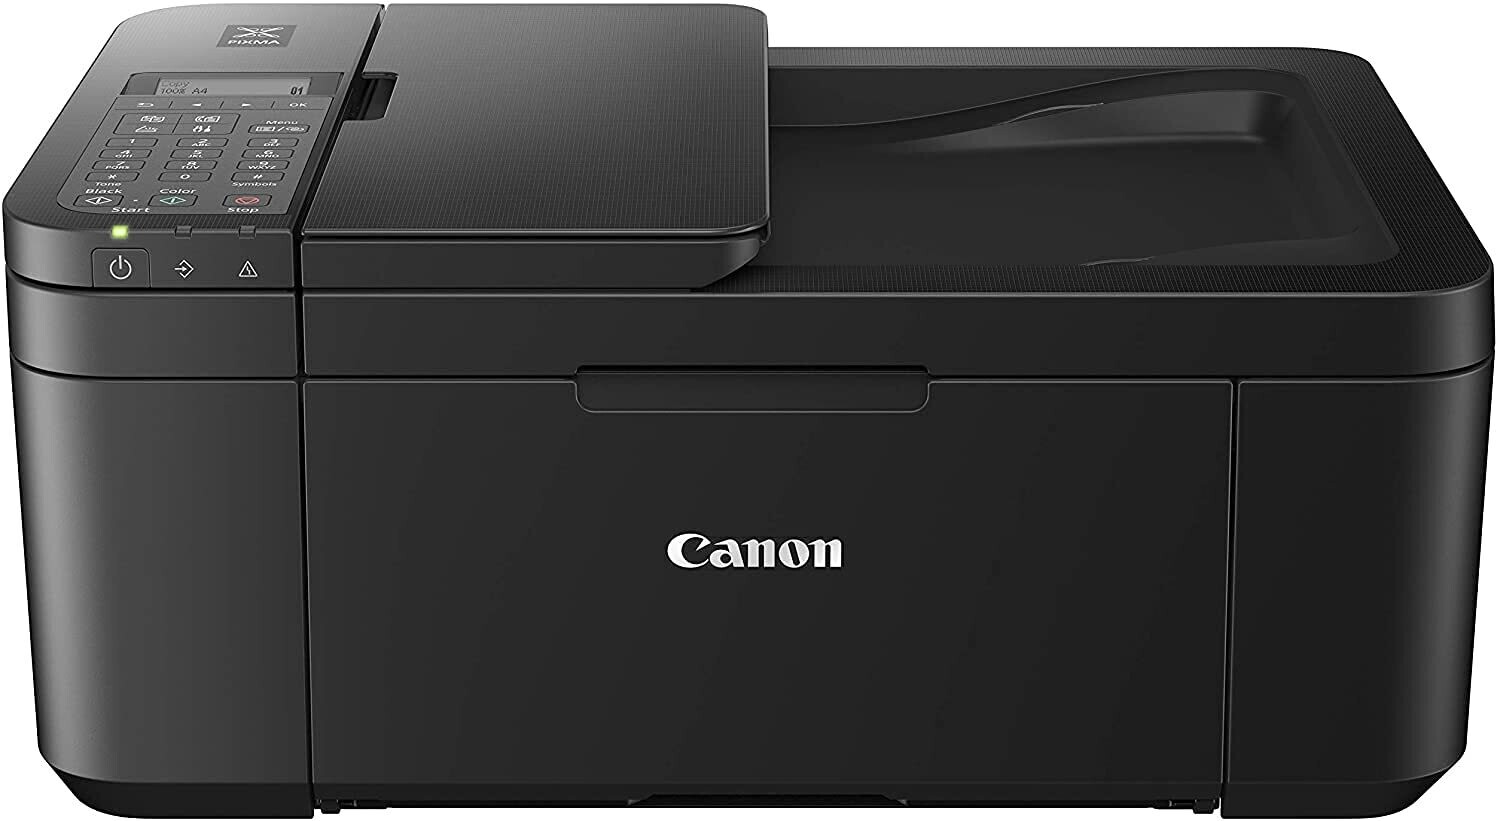 Canon E4570 Wi-Fi Color Multifunction Inkjet Printer